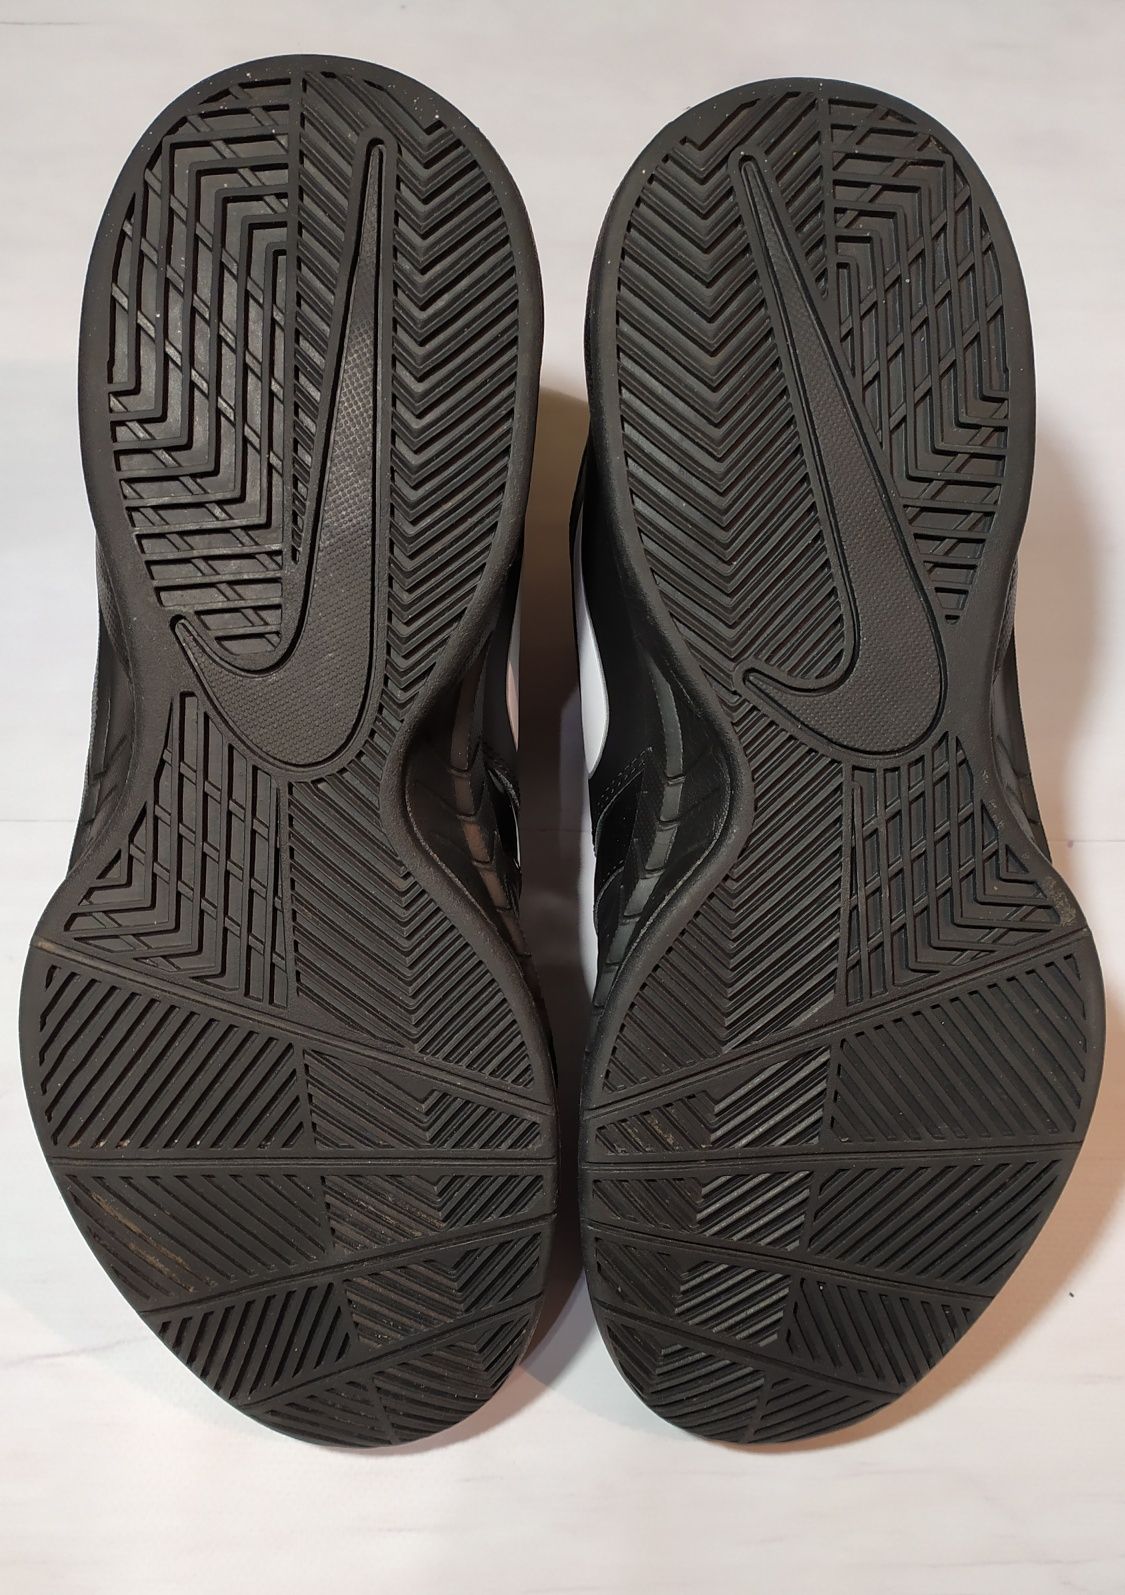 Баскетбольные кроссовки Nike Air Visi Pro 5 basketball shoes